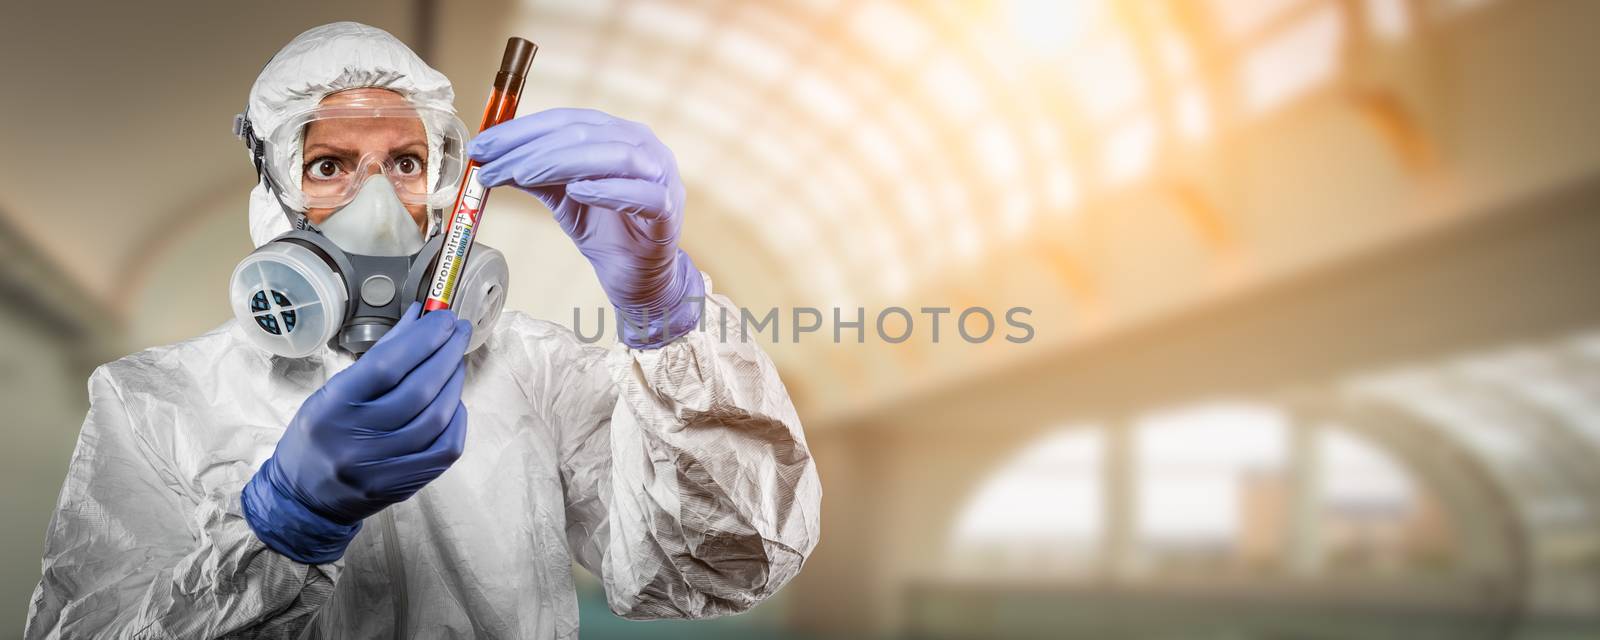 Female Doctor or Nurse In Hazmat Gear Holding Positive Coronavirus Test Tube Banner.